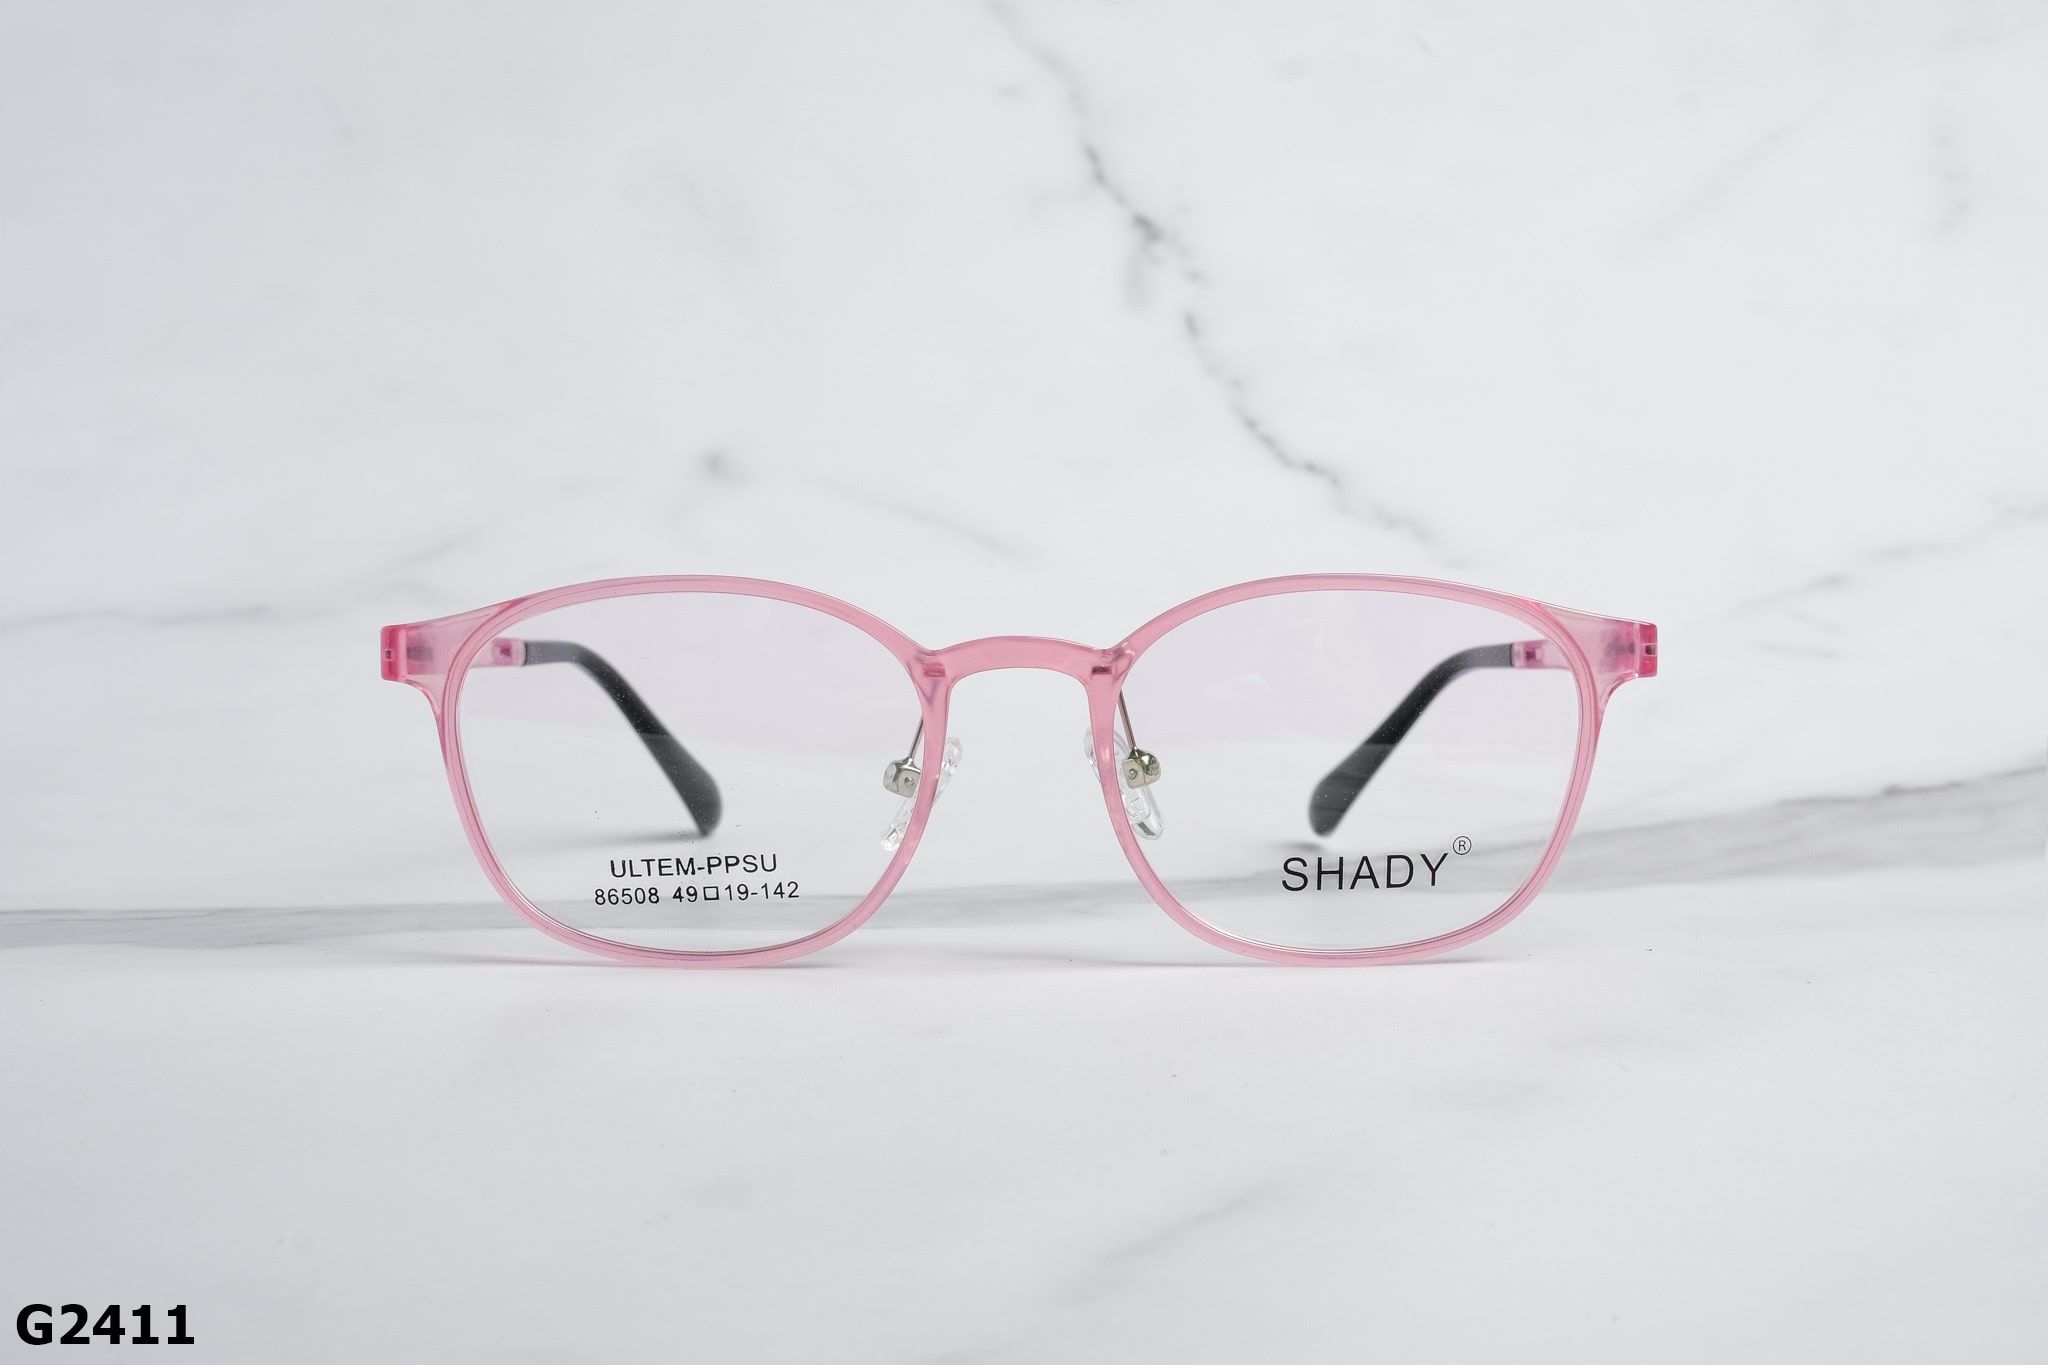  SHADY Eyewear - Glasses - G2411 